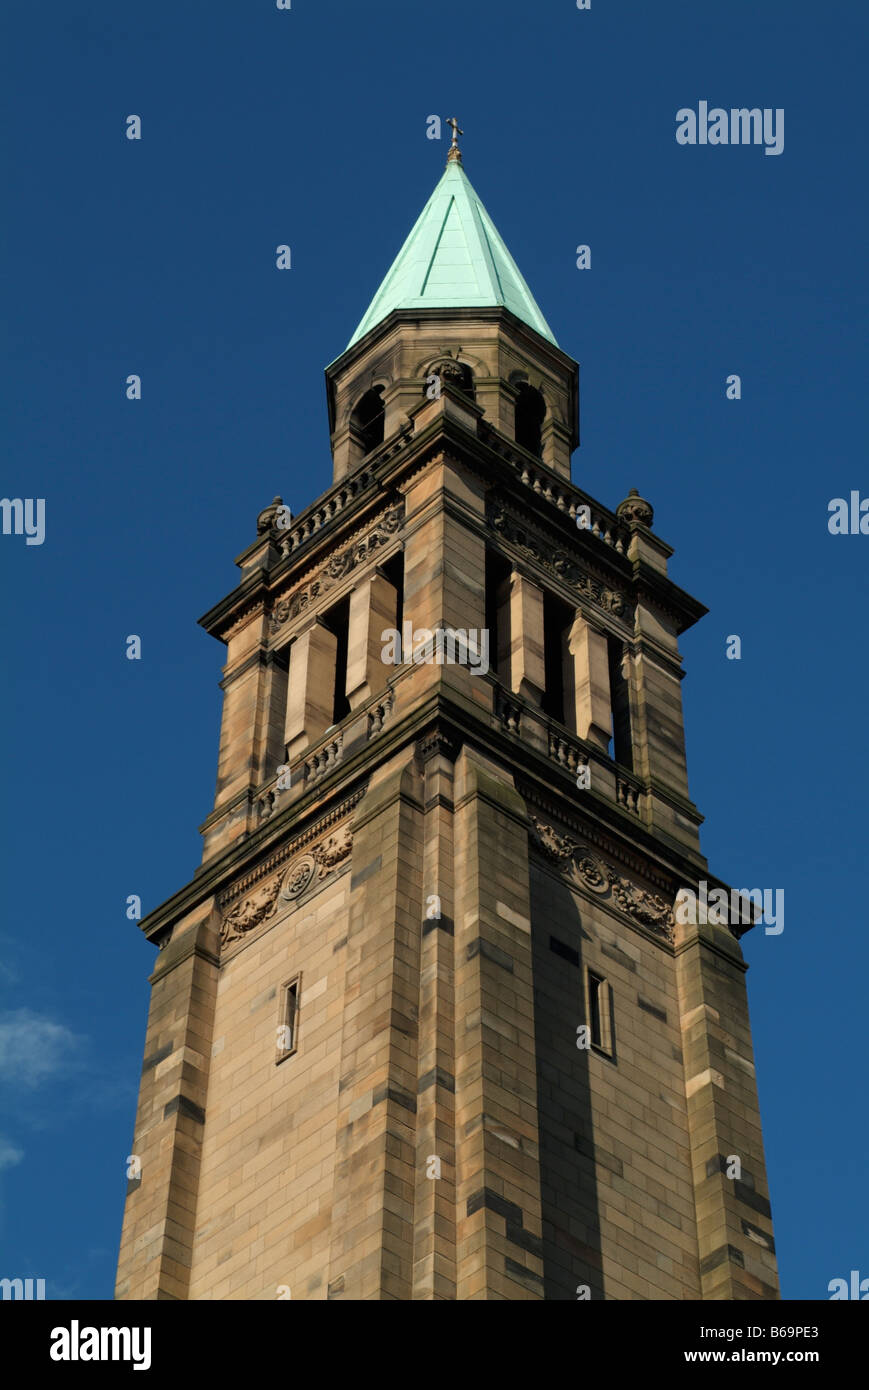 The bell tower of St George's West Church, Shandwick Place, Edinburgh, Scotland, UK. Stock Photo